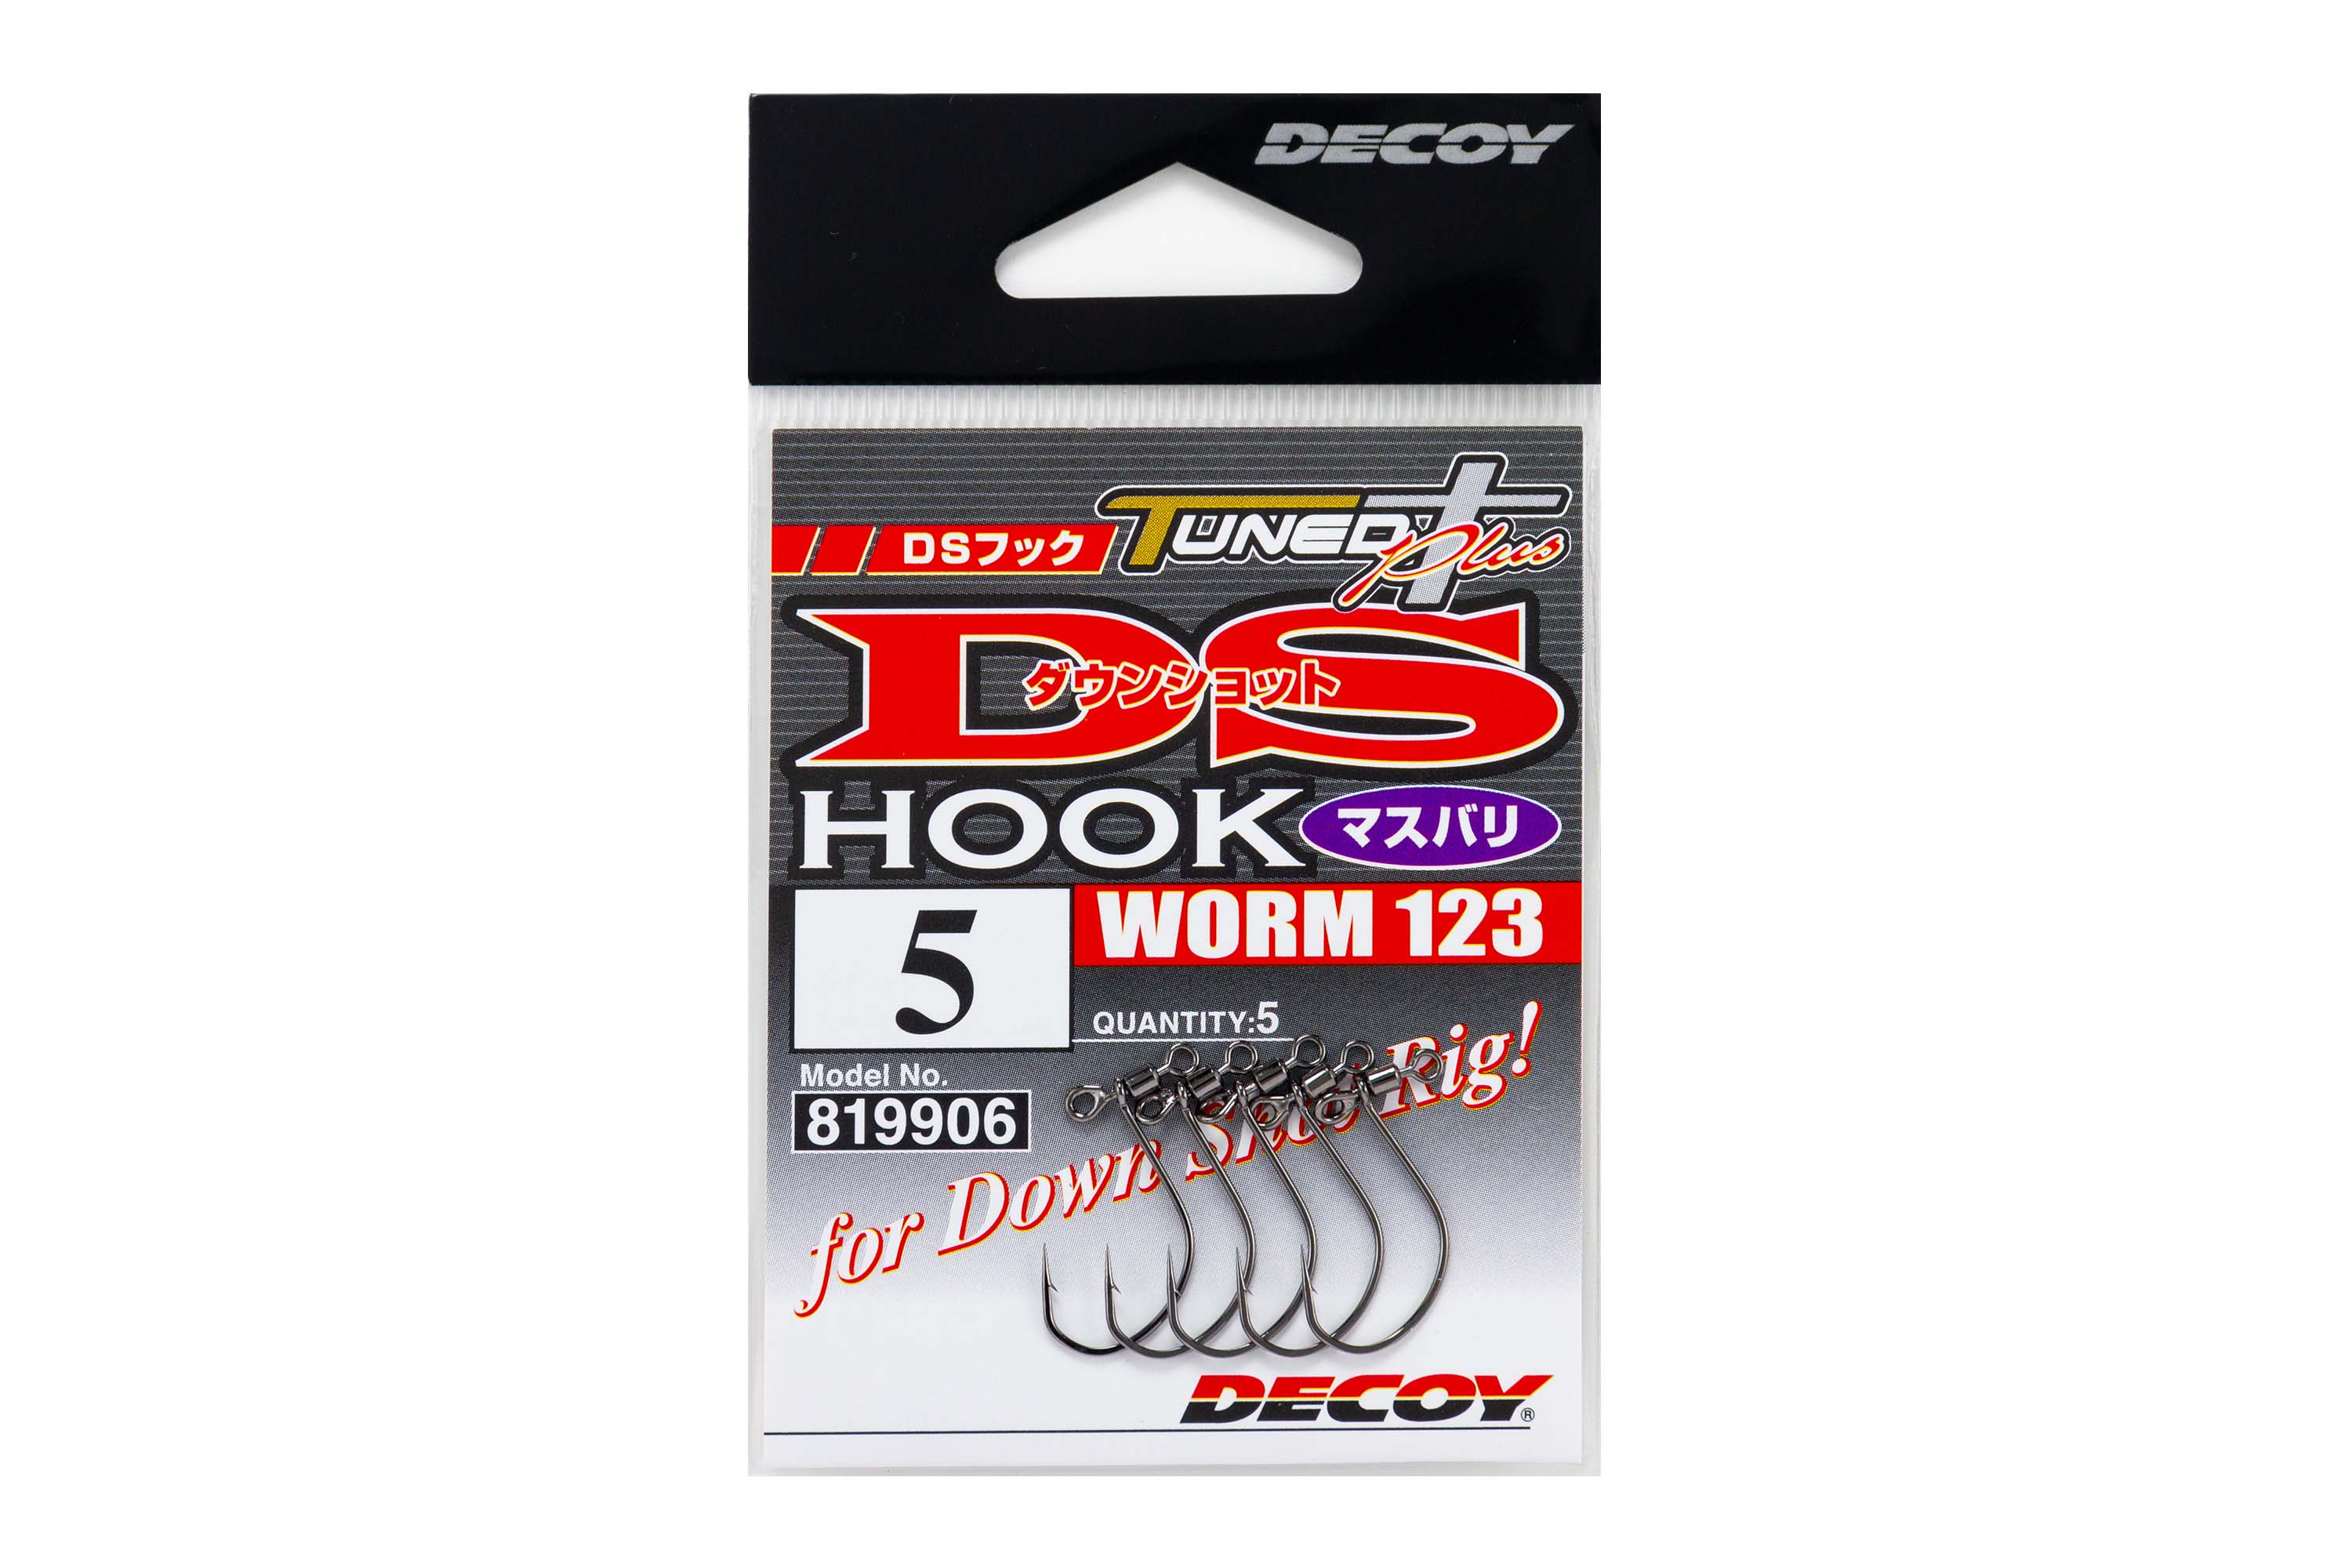 Warm Hook - Decoy HD Hook Offset Worm 117 – The Fishermans Hut